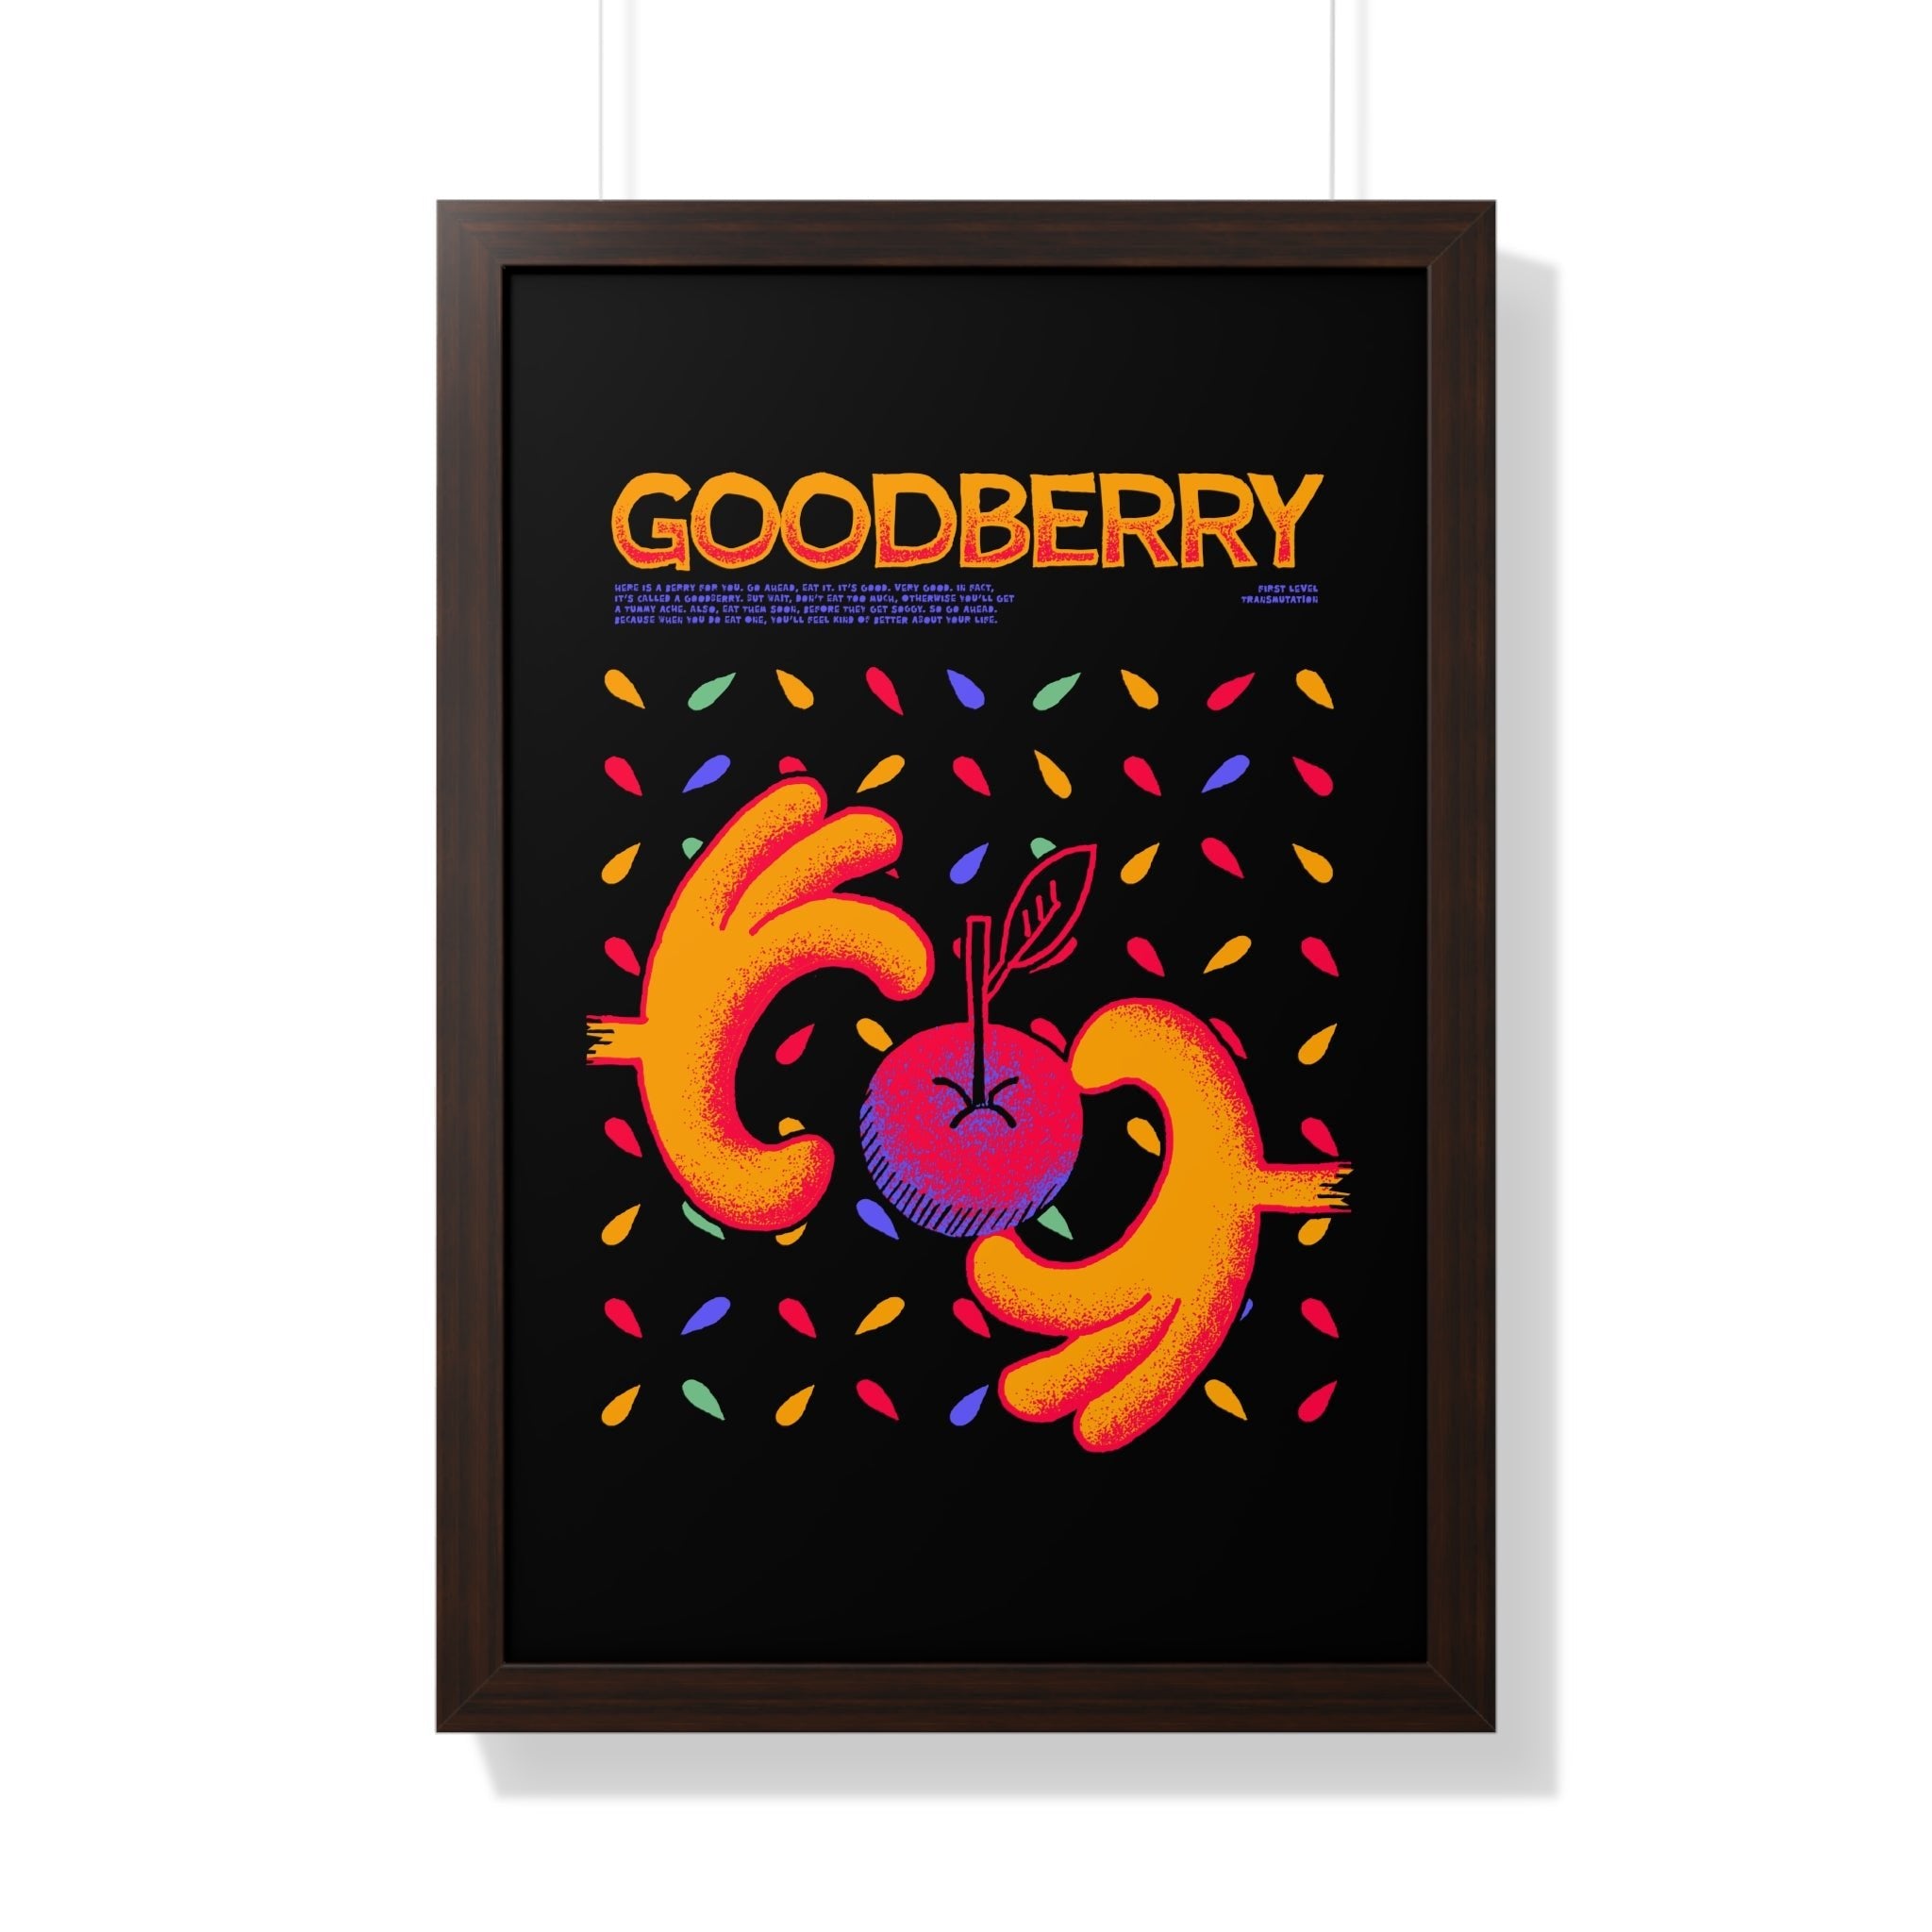 Goodberry | Framed Poster - Framed Poster - Ace of Gnomes - 27989968859412533370